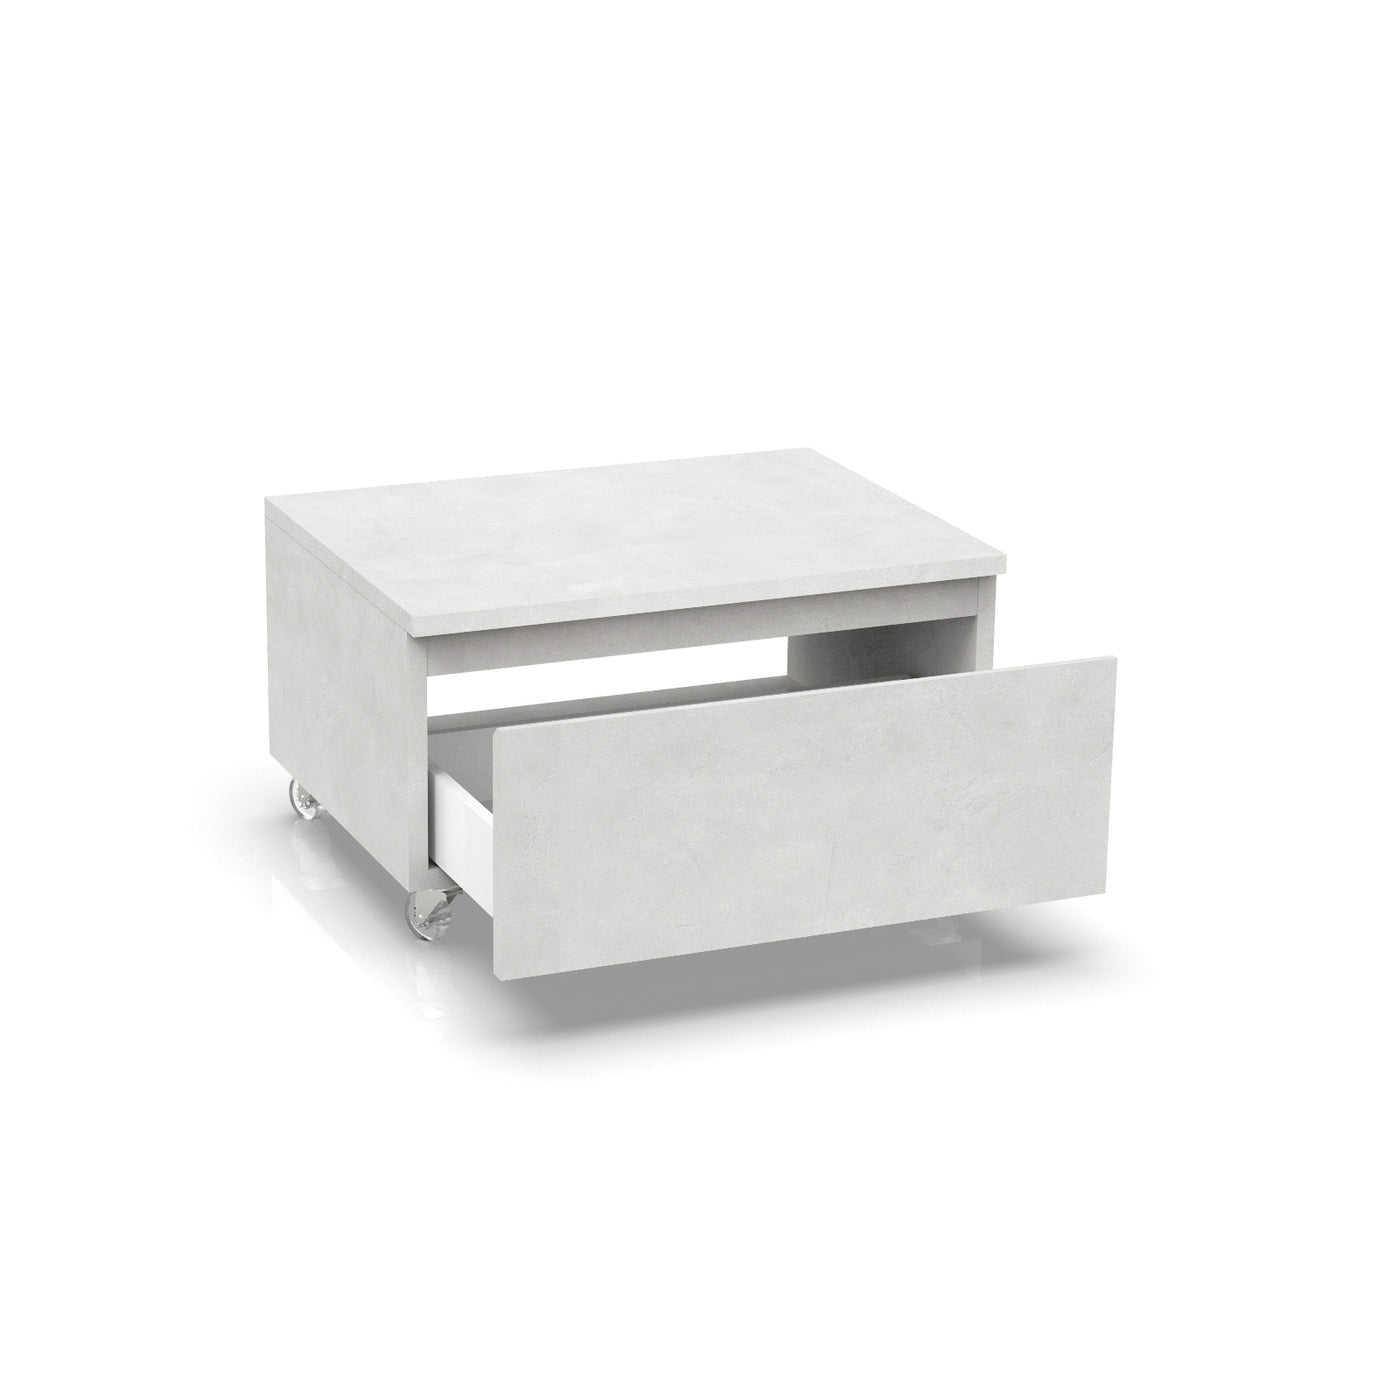 YOKA stone white chest of drawers 60 cm